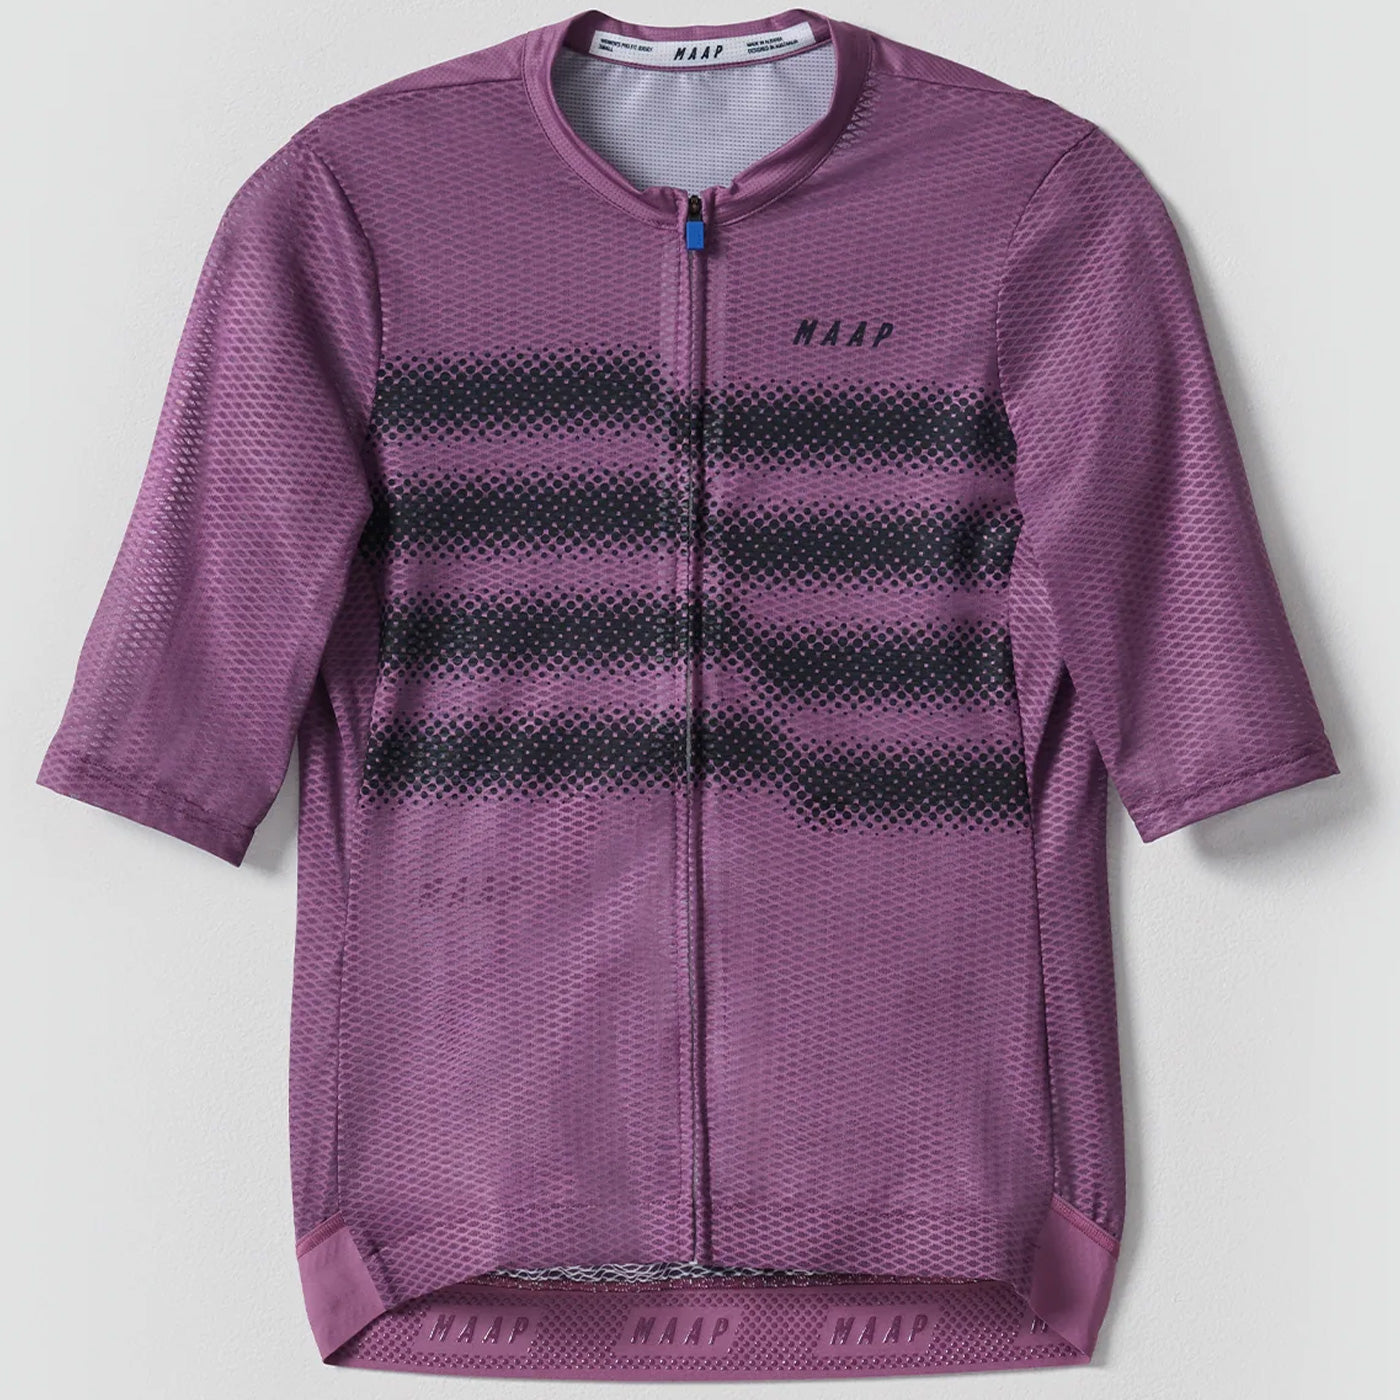 Maap Blurred Out Ultralight Pro women jersey - Purple | All4cycling